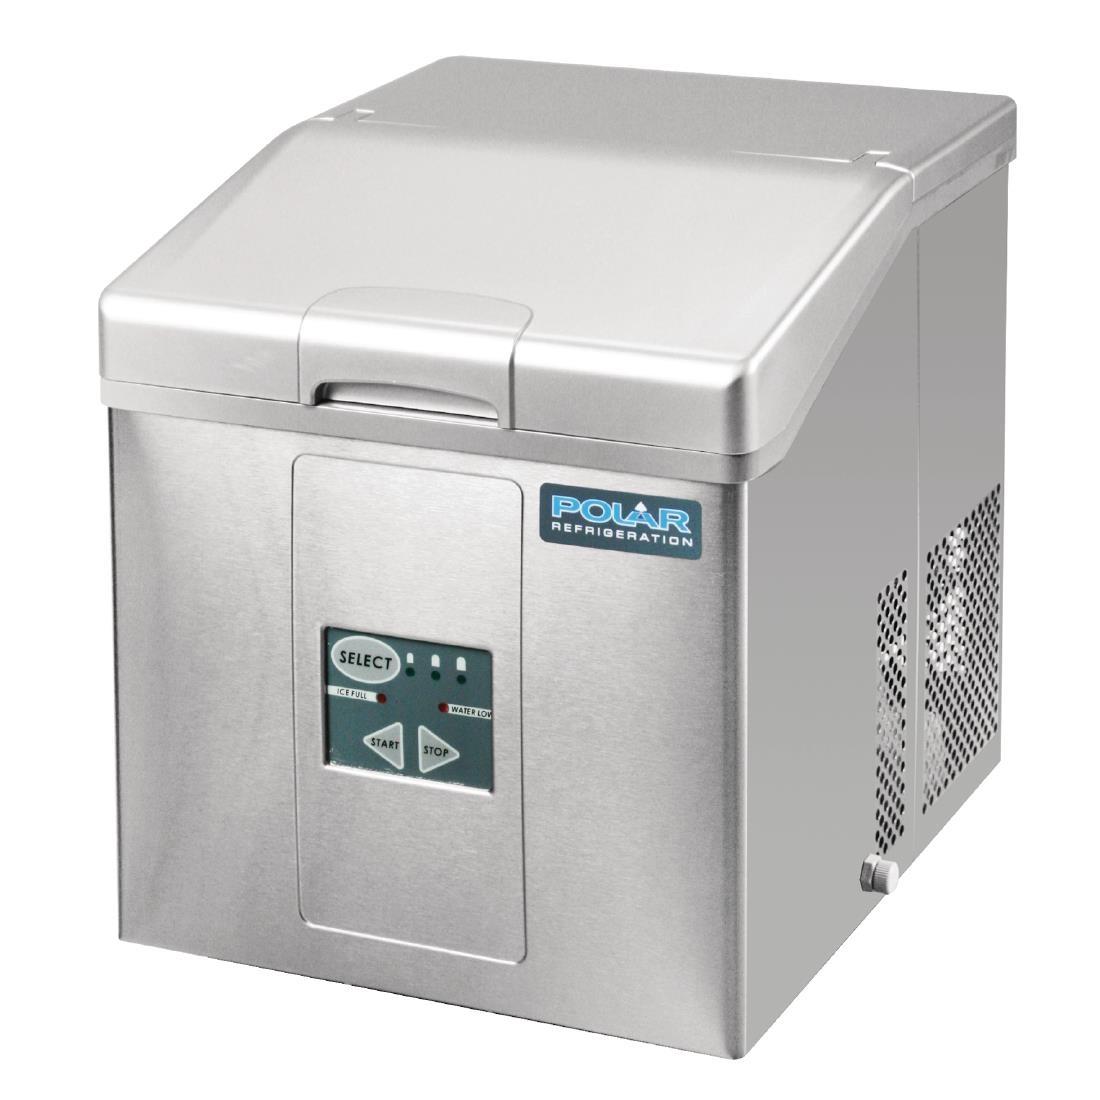 Polar C-Series Countertop Ice Machine 17kg Output - G620  - 4